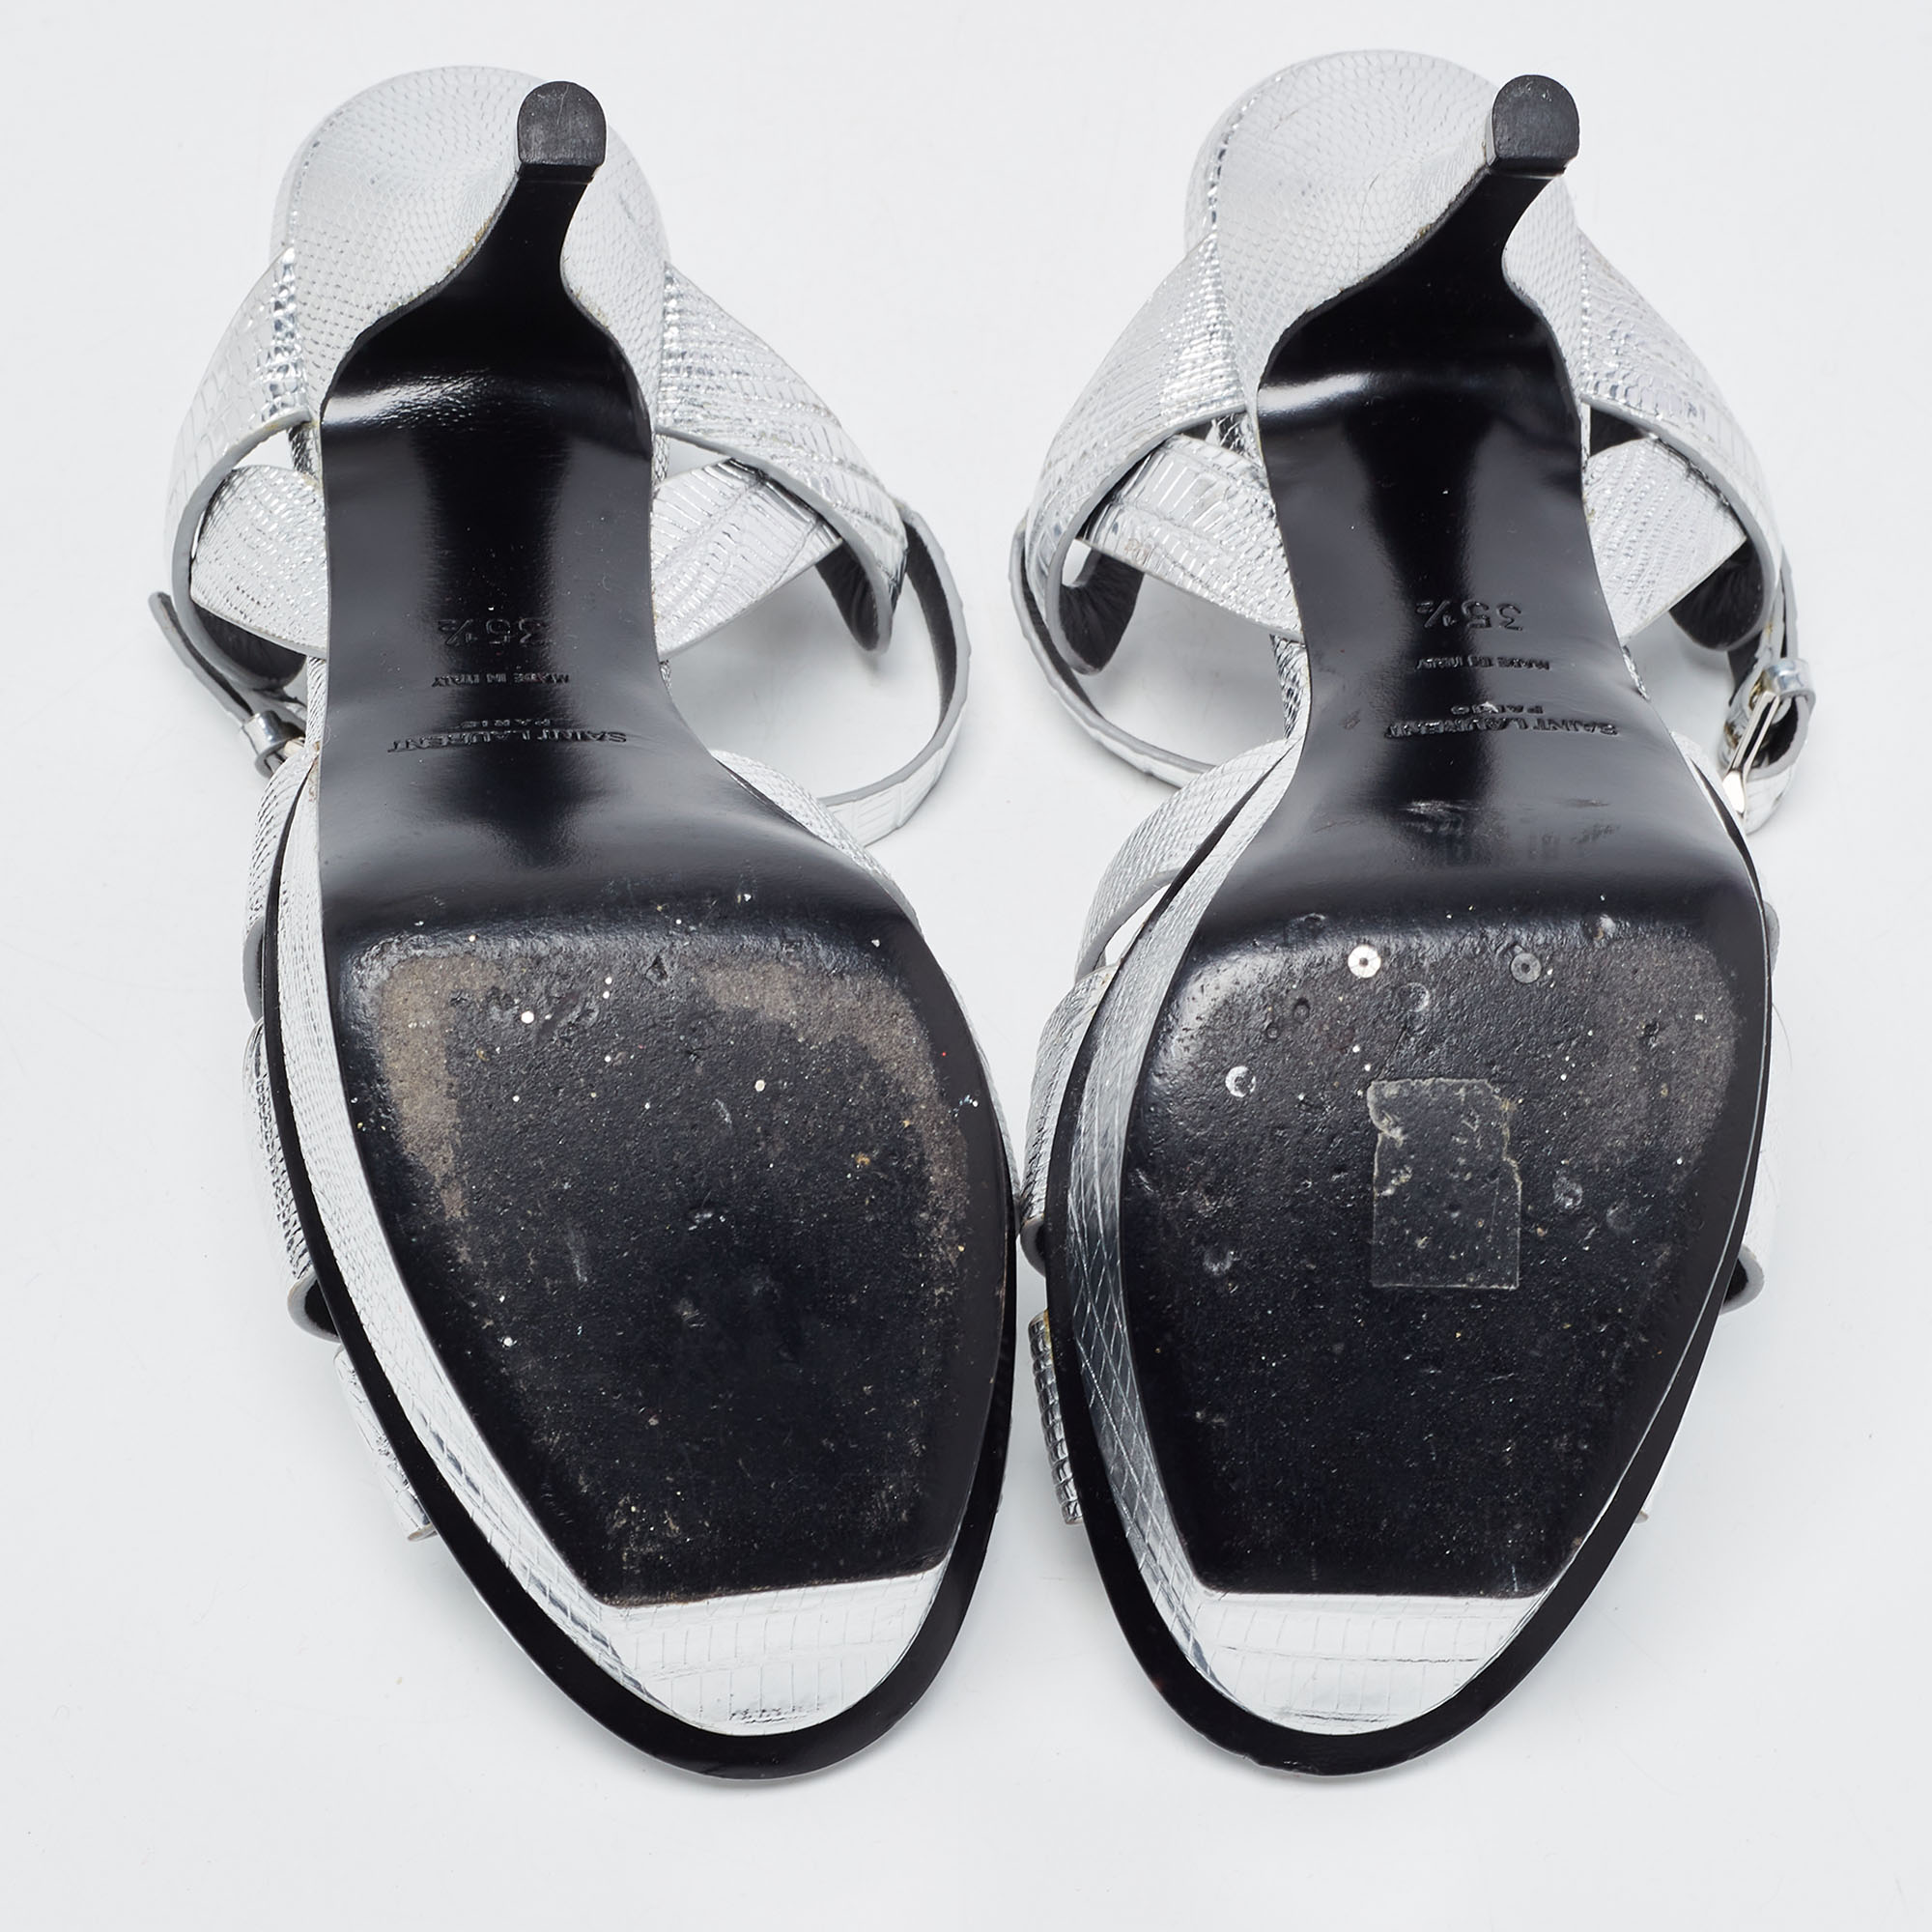 Saint Laurent Silver Lizard Embossed Leather Tribute Sandals Size 35.5